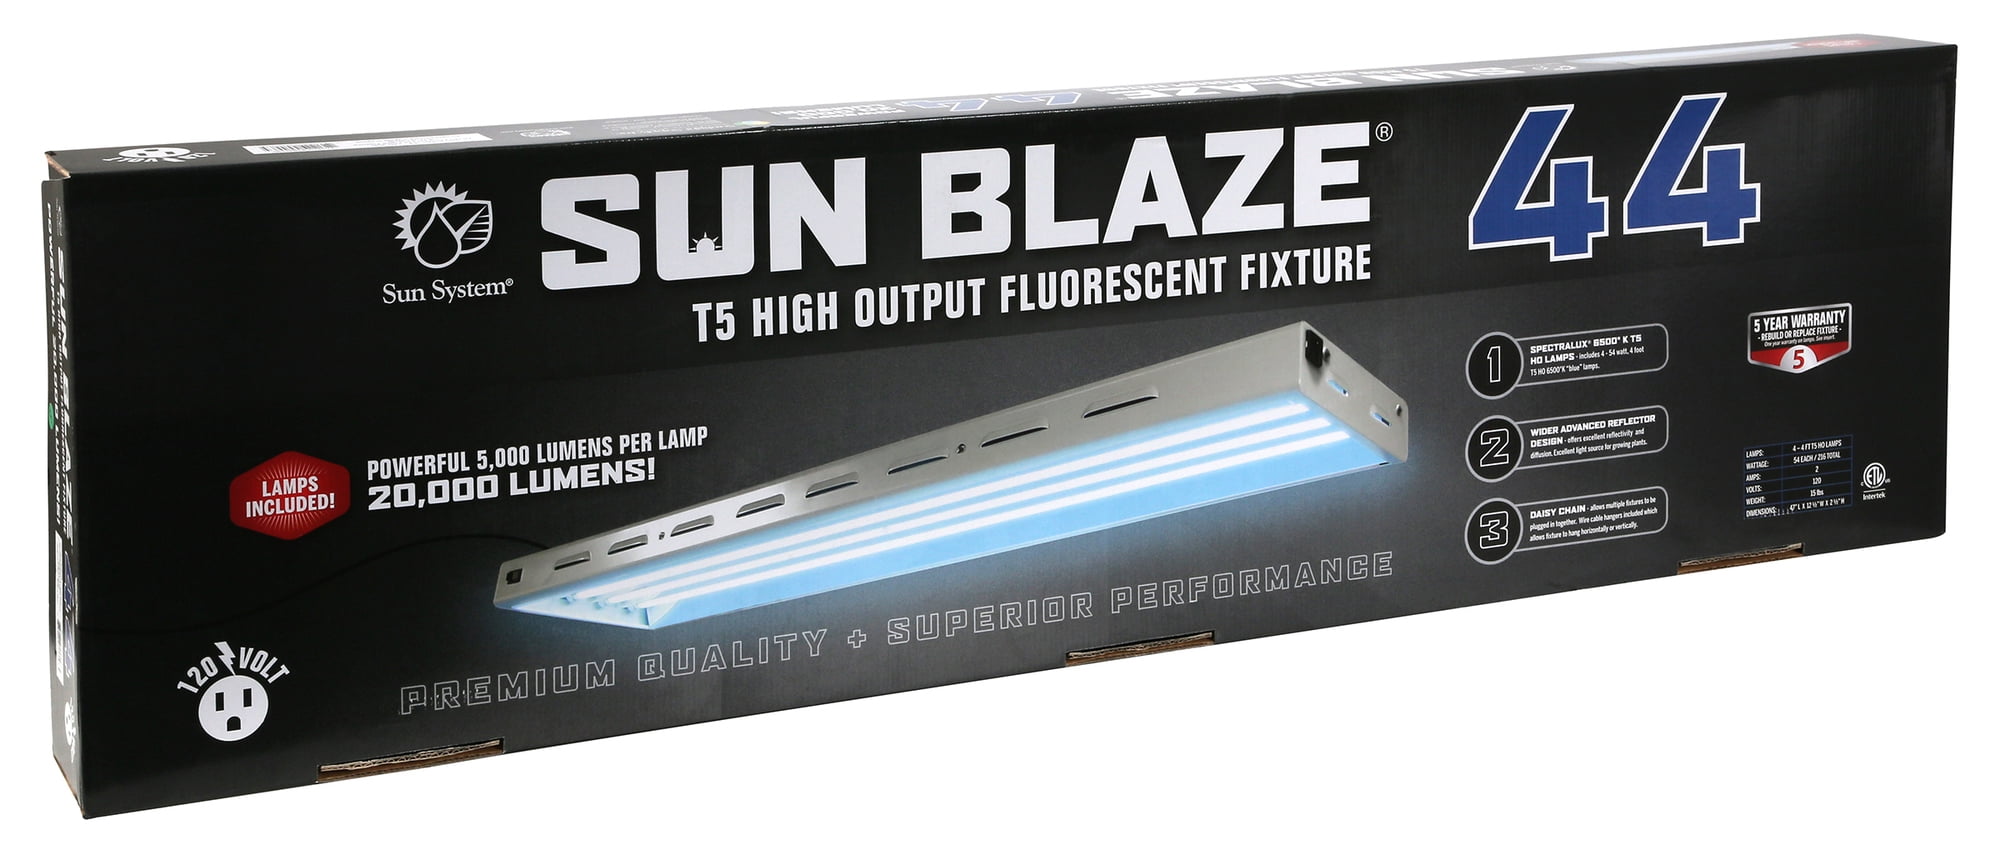 Details about   Sun Blaze 22 T5 High Output  120 Volt Fluorescent Fixture 